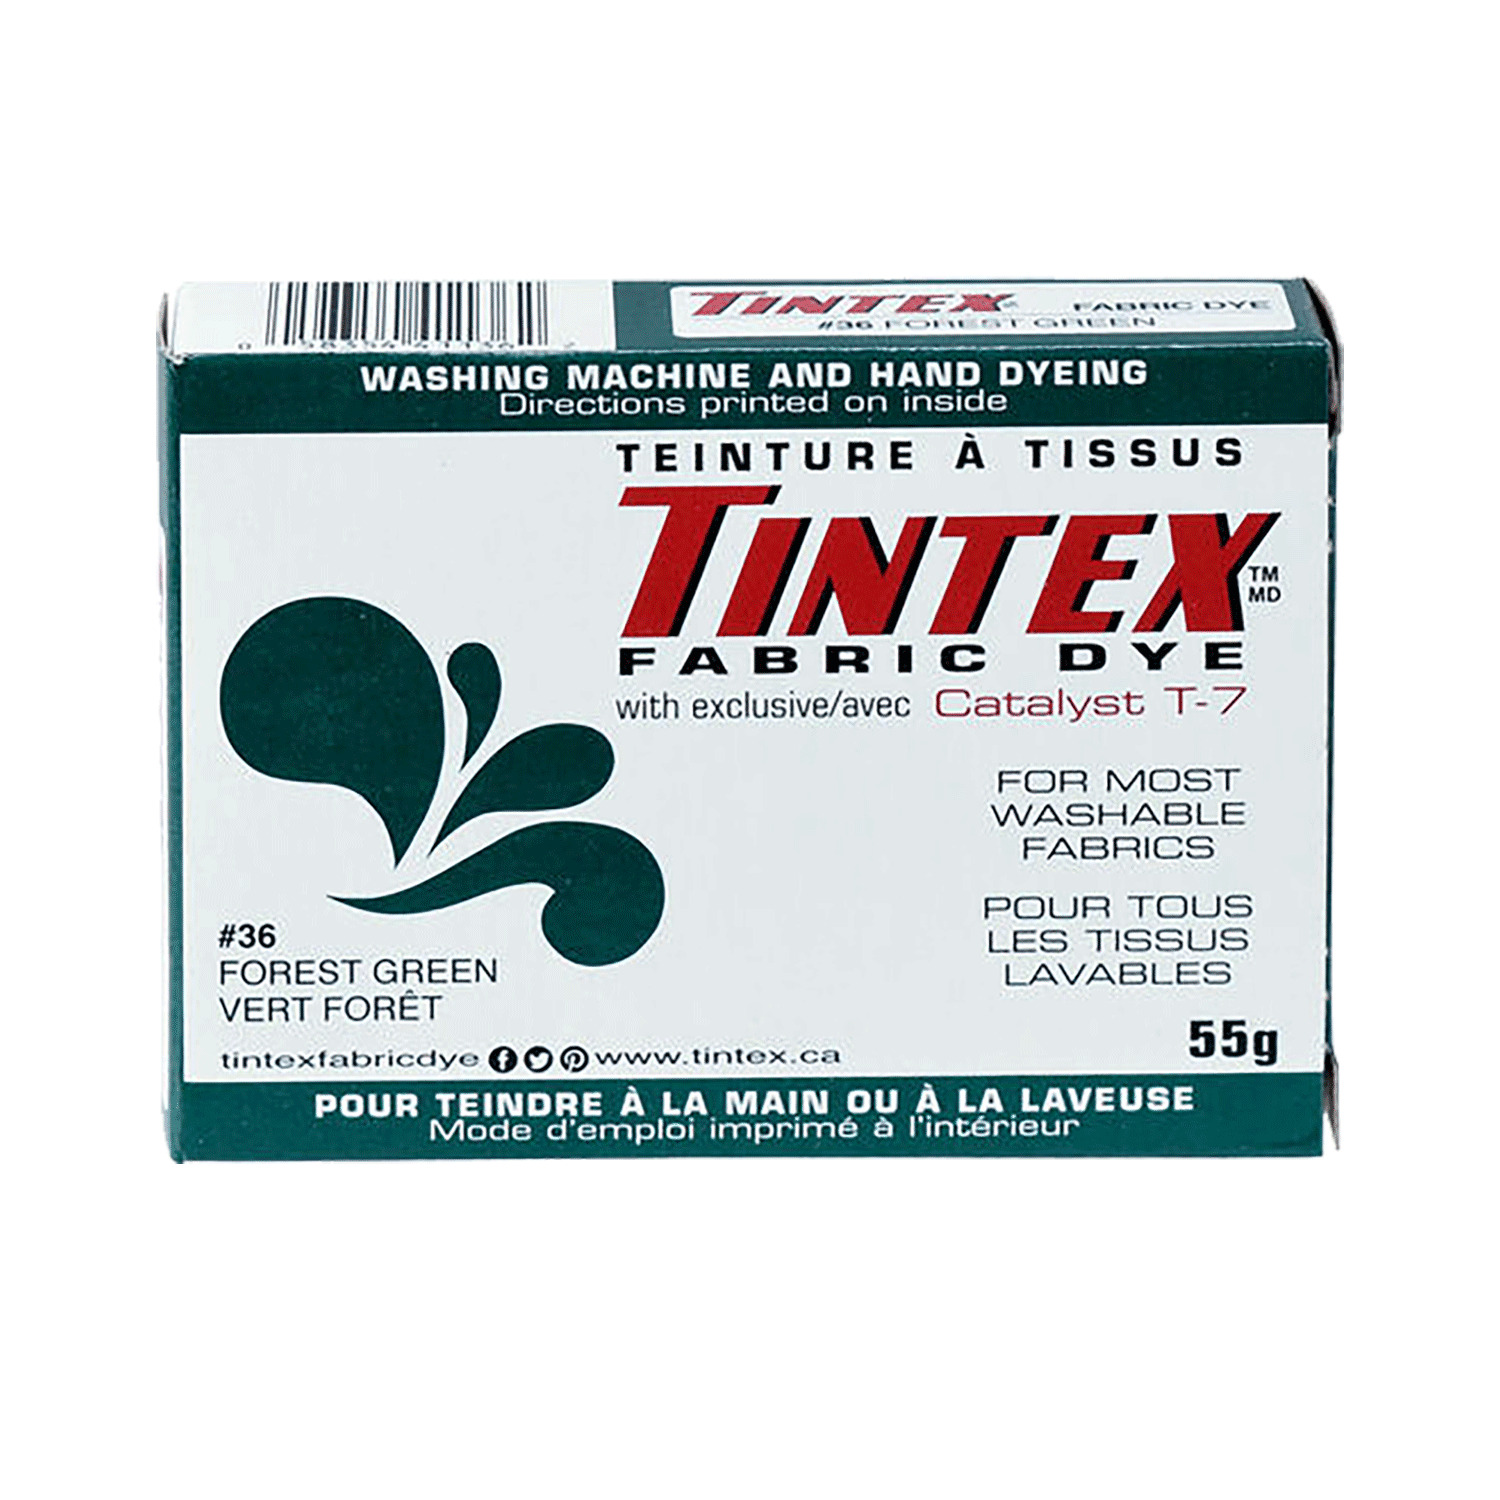 Tintex - Teinture à tissues tout usage - Vert forêt #36